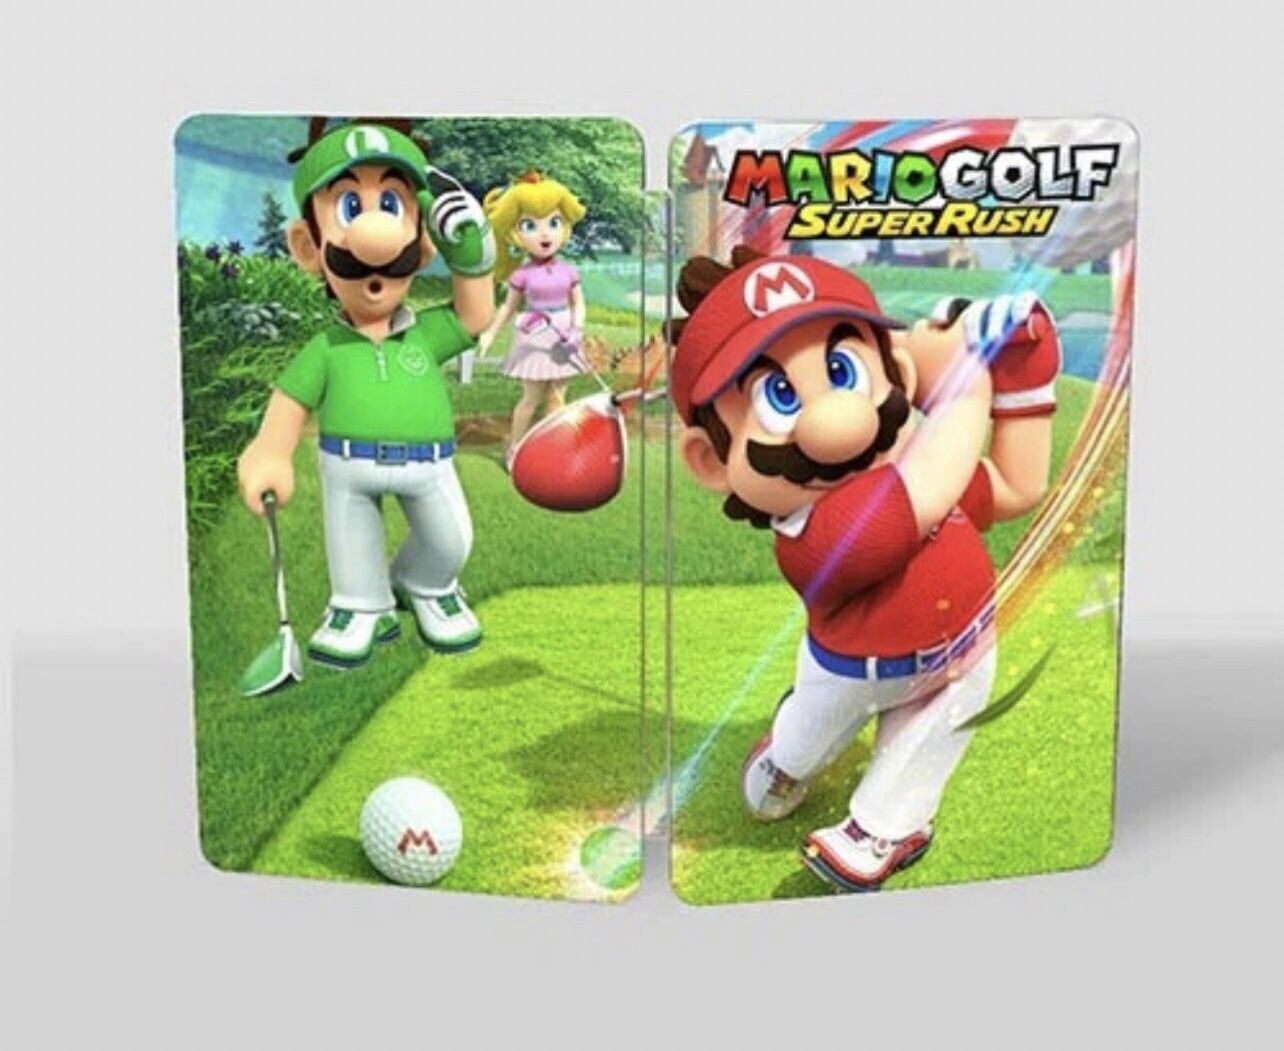 Mario Golf: Super Rush Custom made Steelbook for Nintendo switch (No Game) New